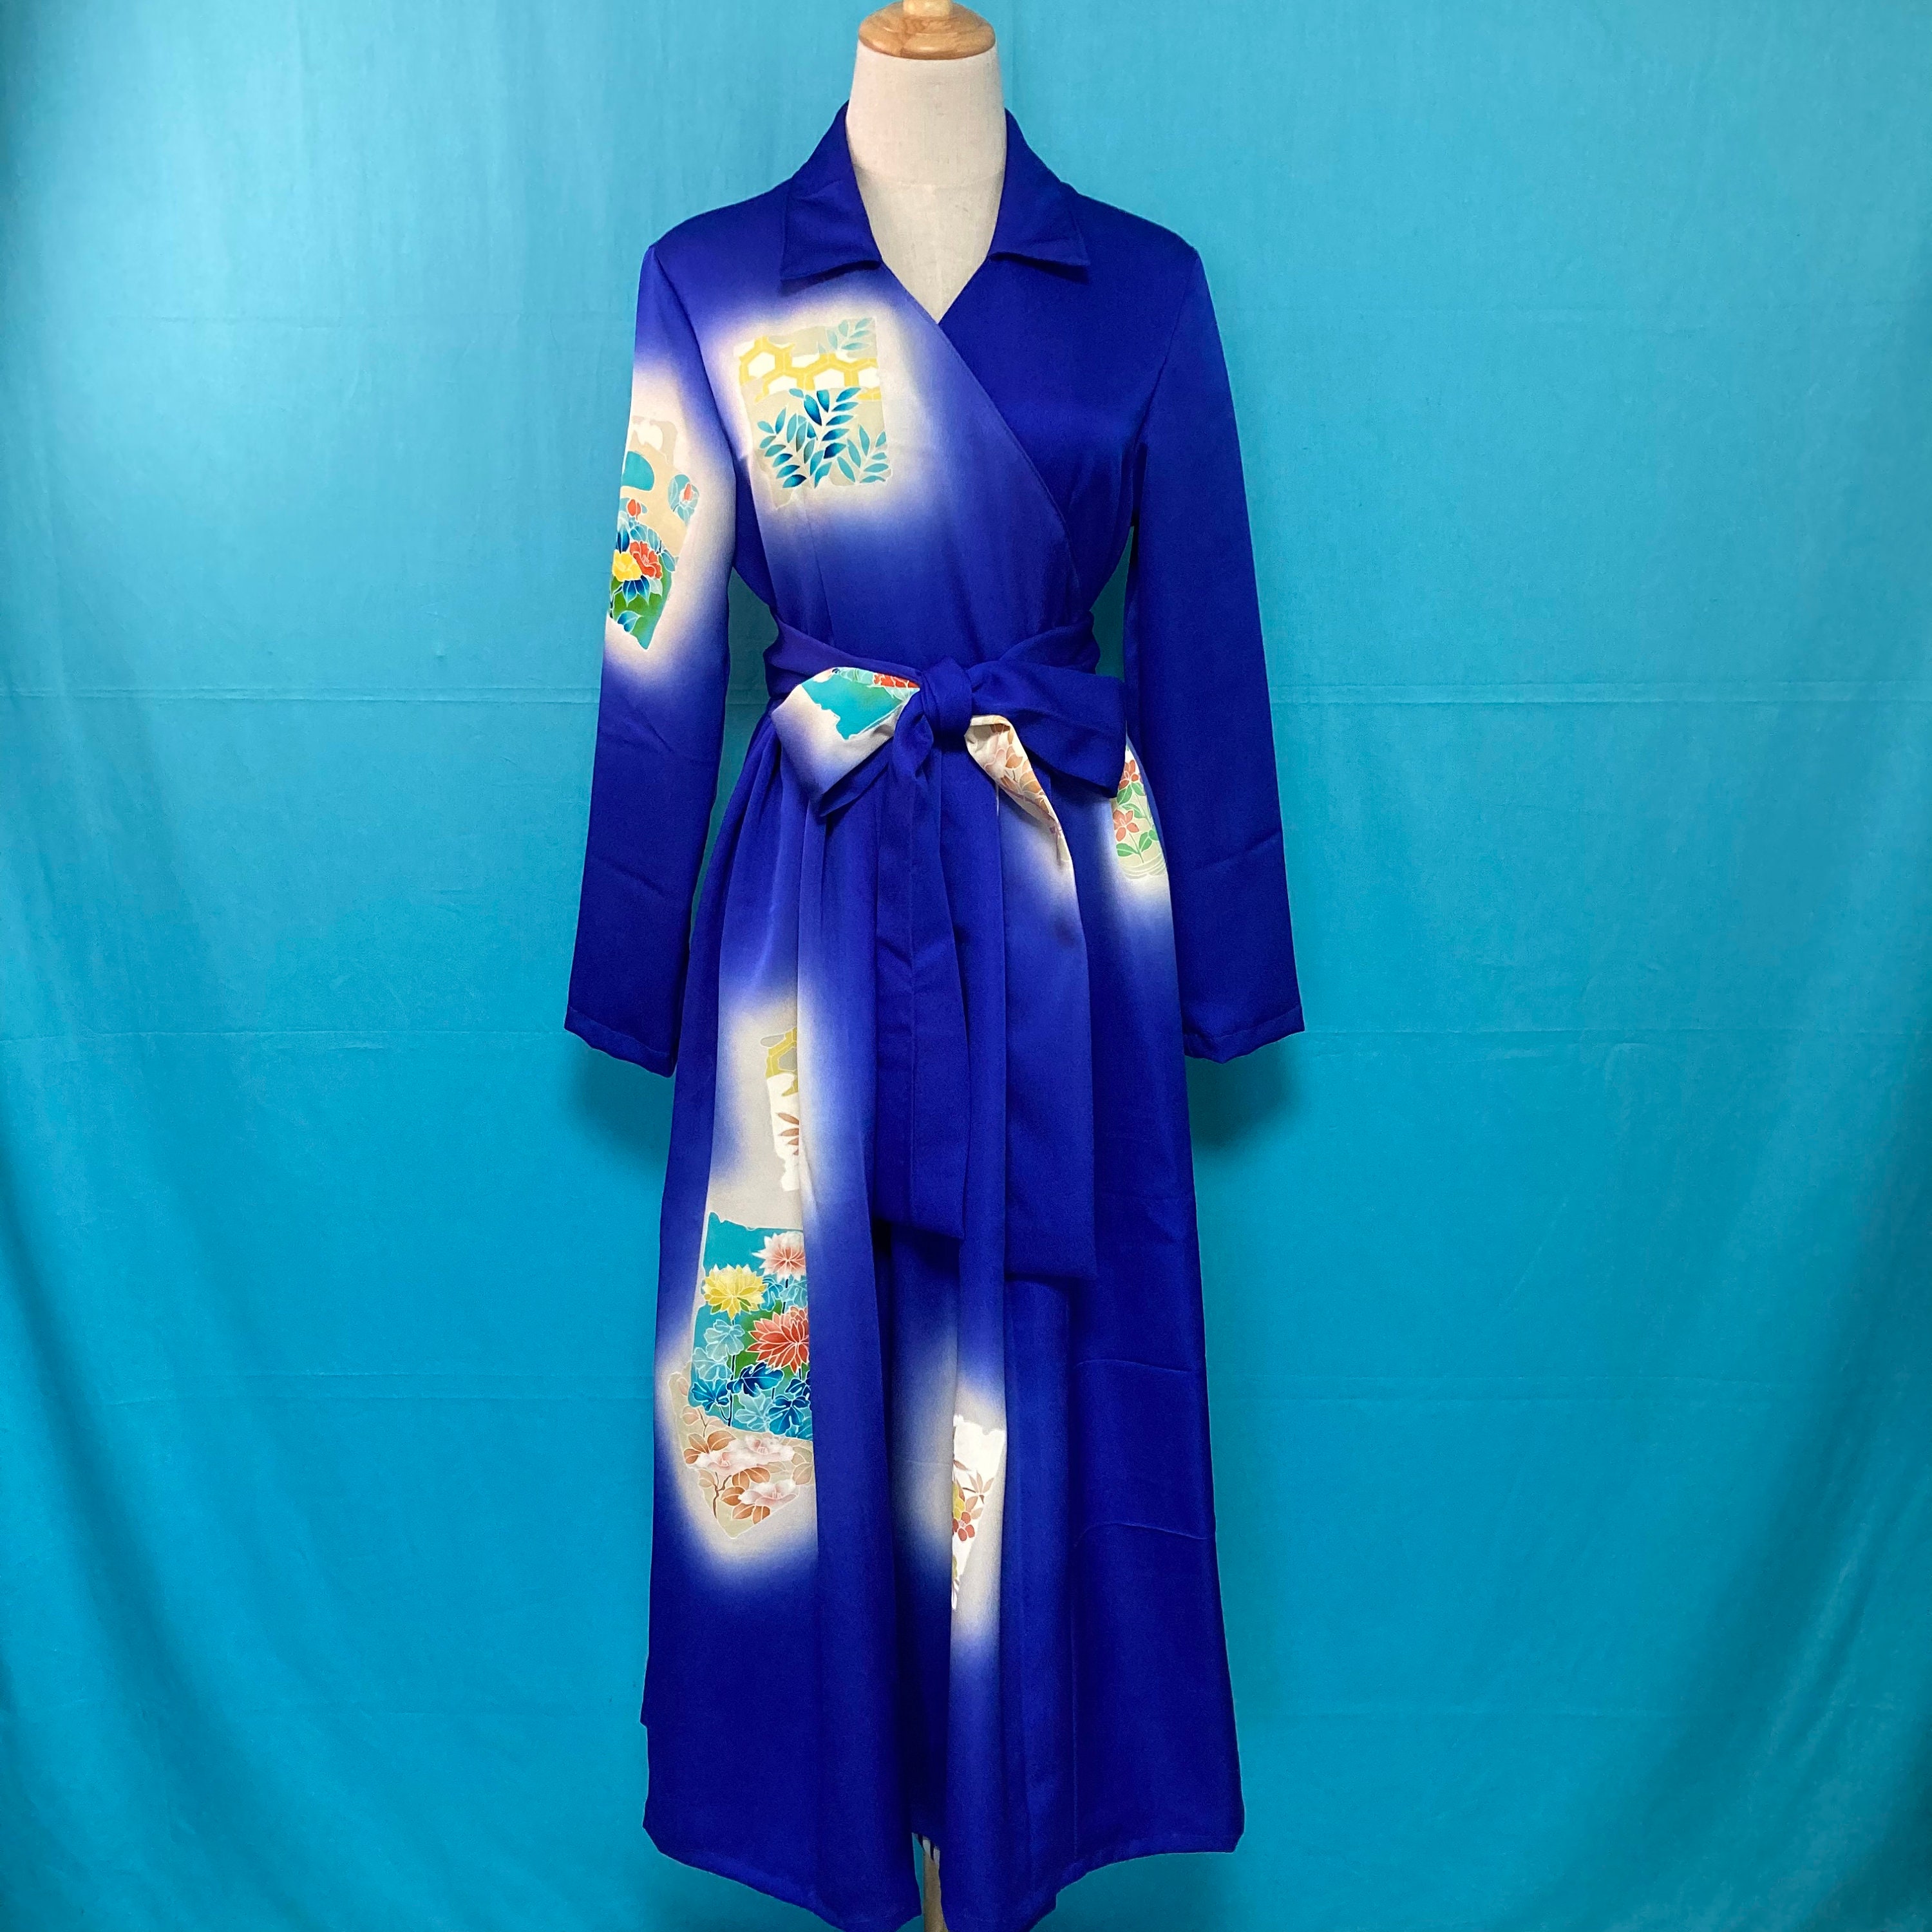 Kleding Herenkleding Pyjamas & Badjassen Jurken Vintage jaren 1950 Japanse zijde geborduurde dragon Kimono Blauw Gouden Gewaad 